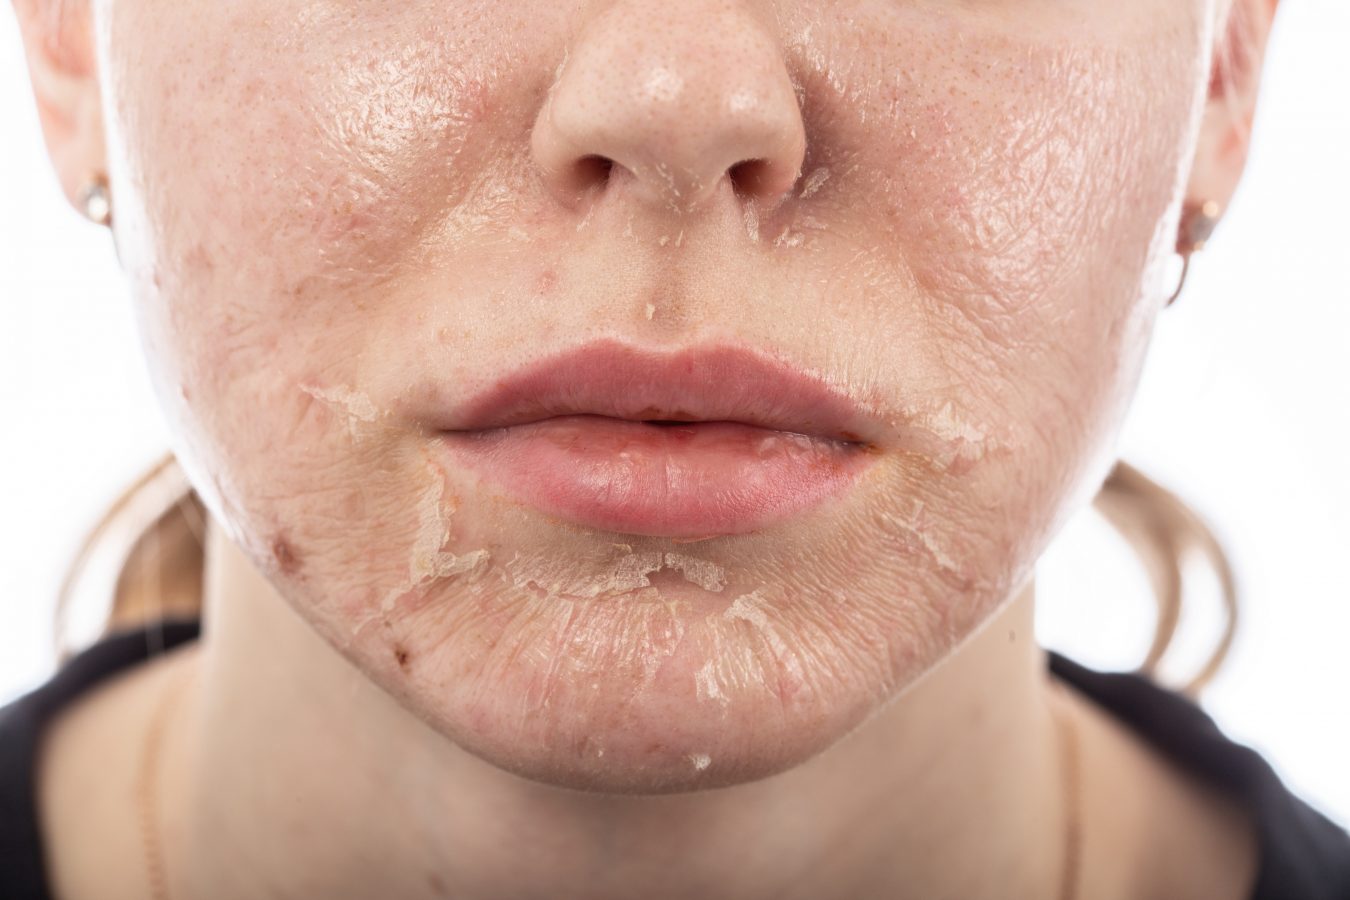 Why does Chemical Skin Peel Work?